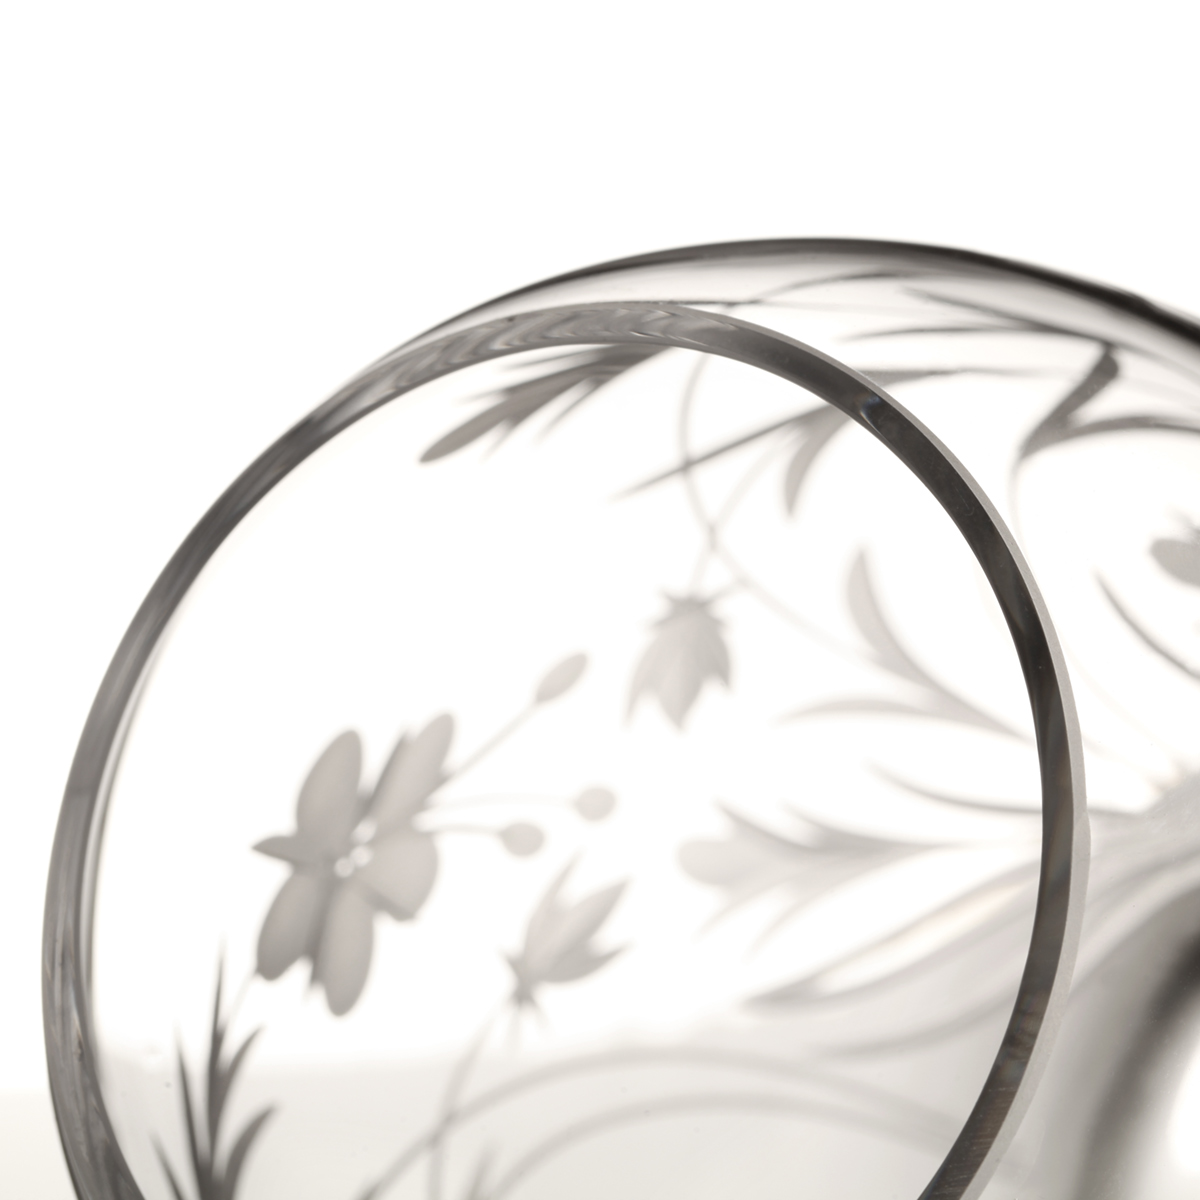 Meadow Flower Barrel Vase - Kristallglas mit Wiesenblumen Muster